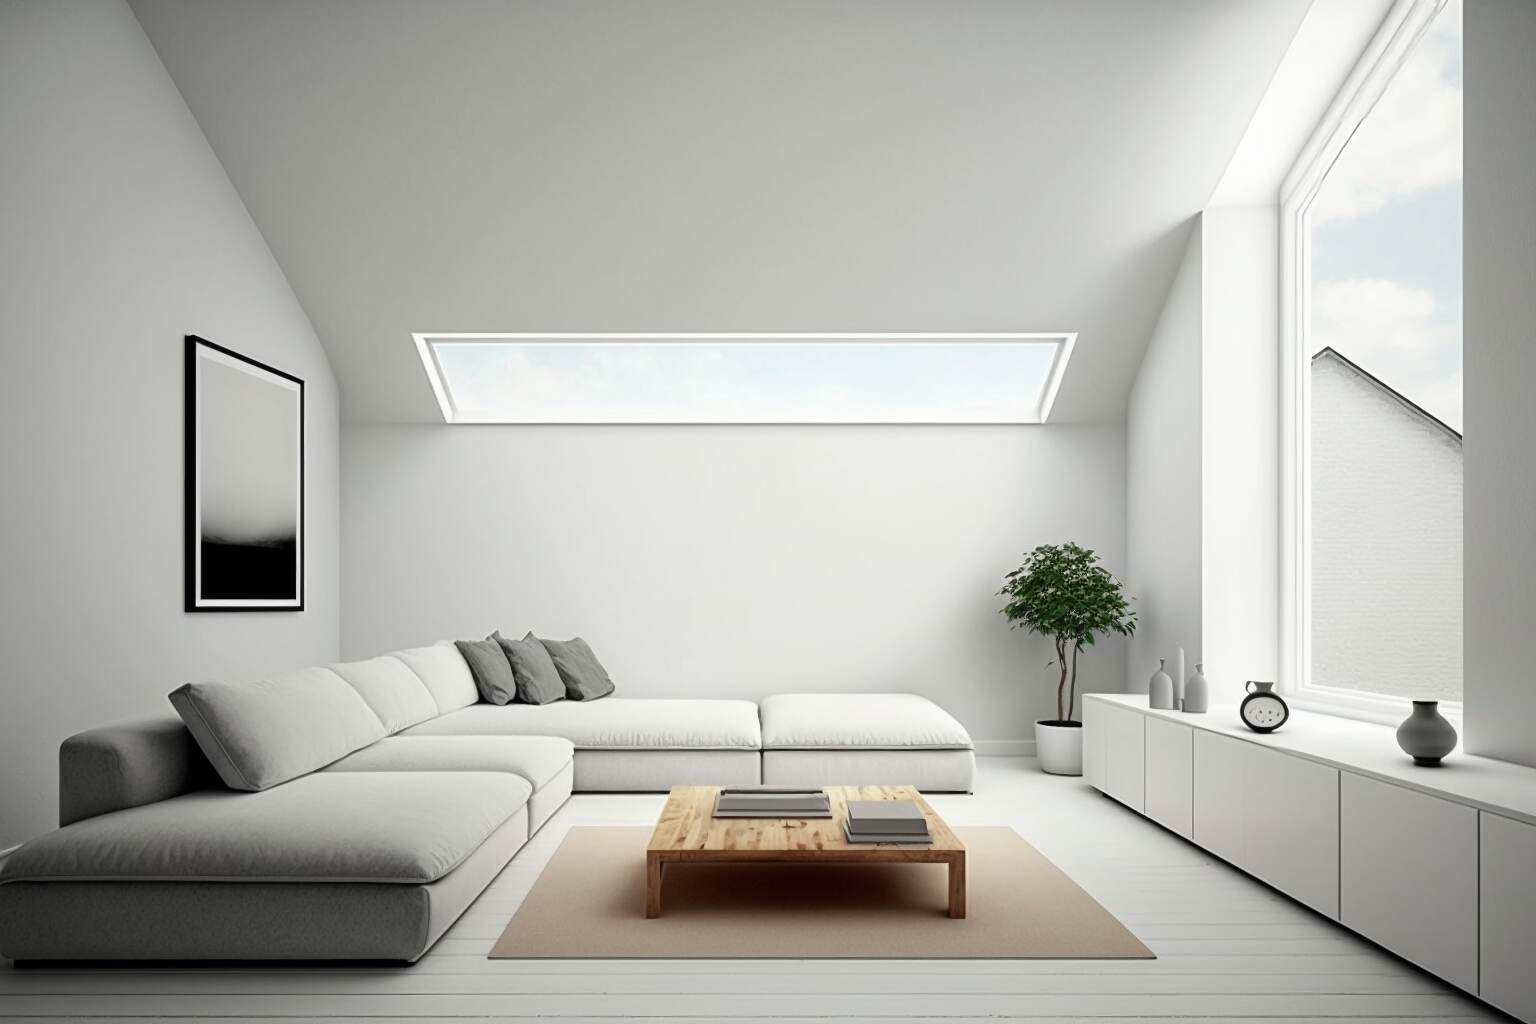 Minimalist Living Room With A Sleek Low Profile Sofa